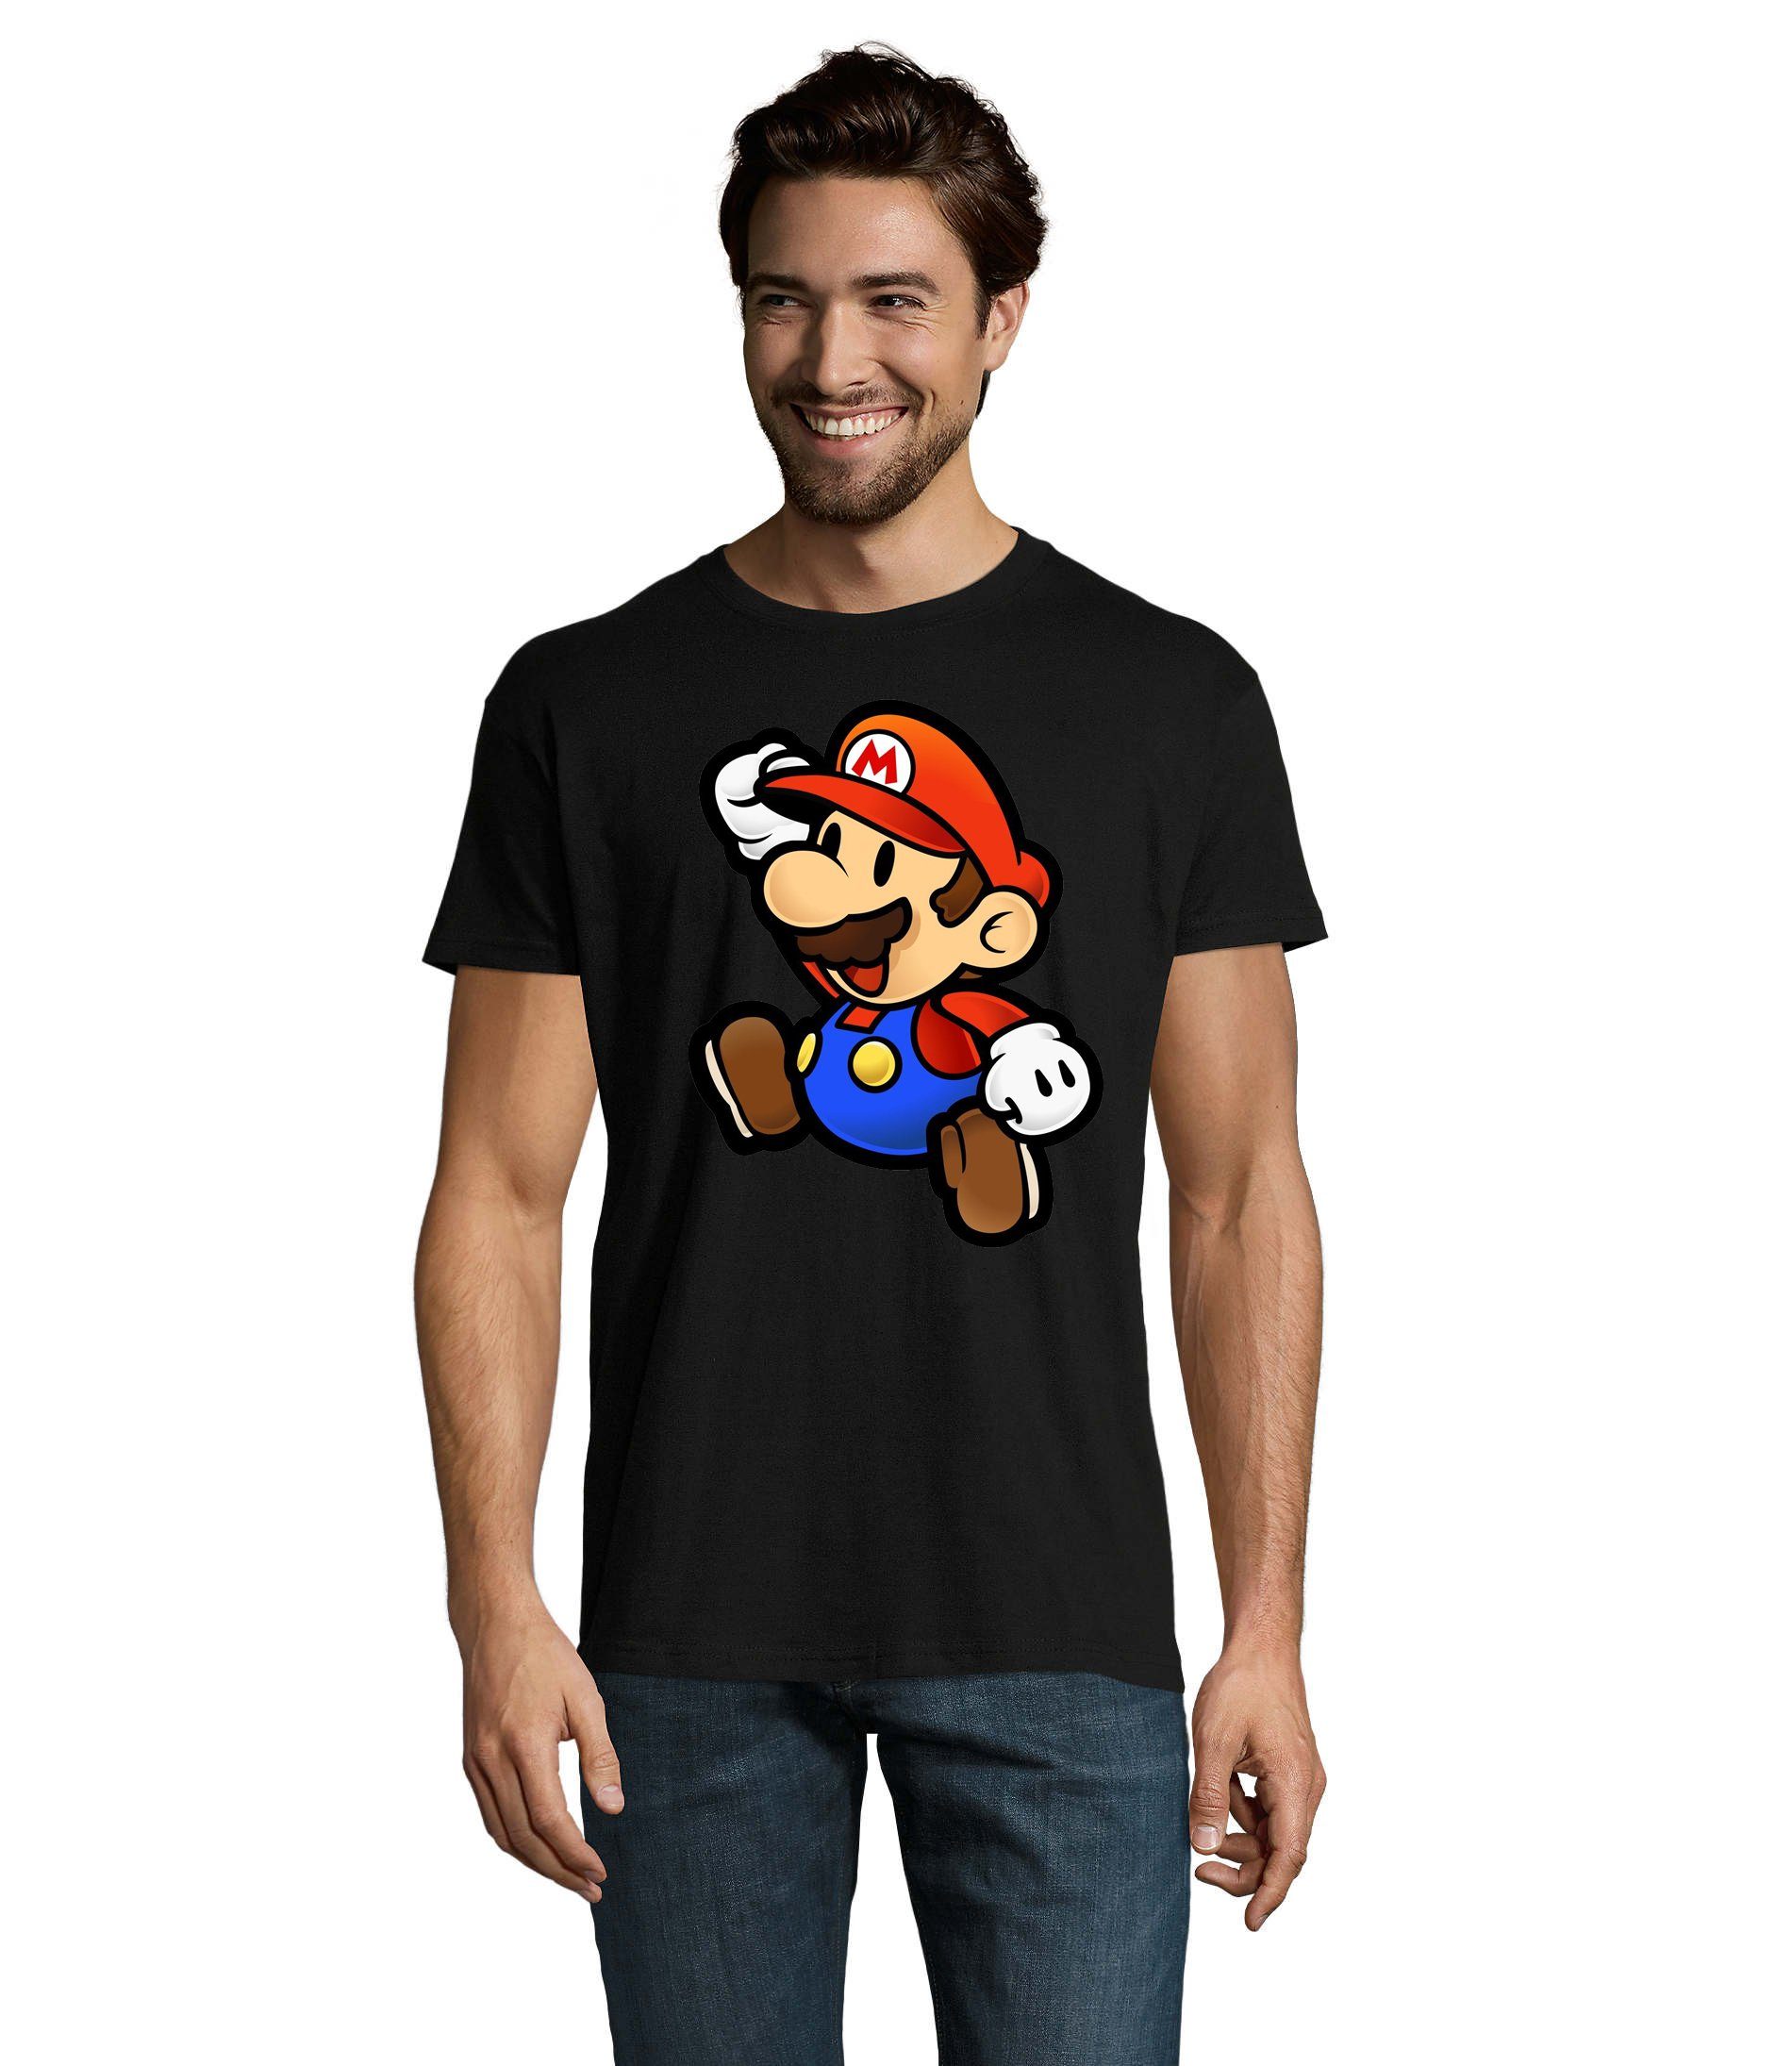 Yoshi Luigi & Mario Blondie Gaming Brownie Super Herren T-Shirt Schwarz Nintendo